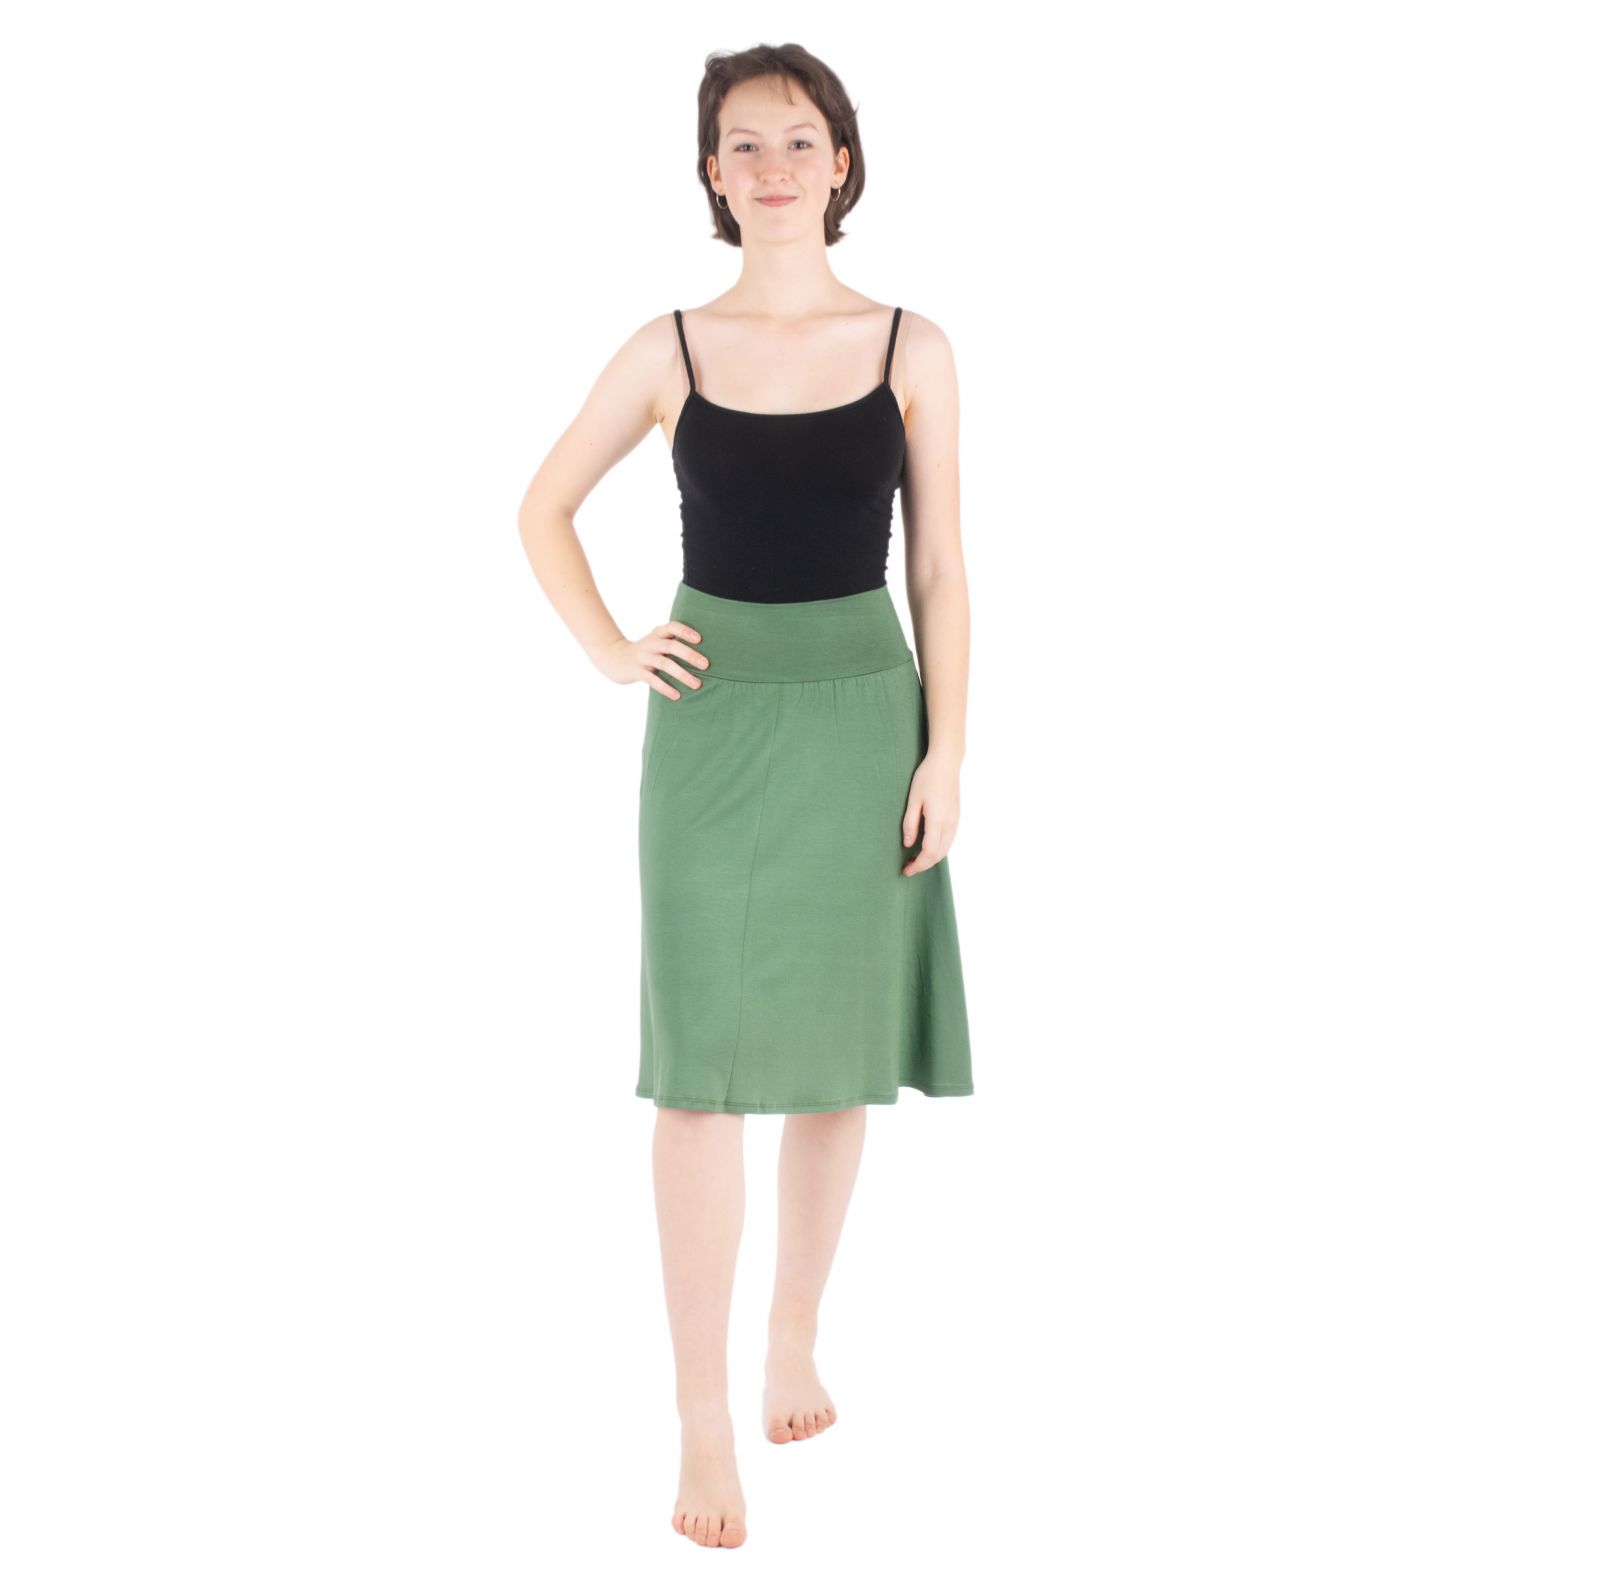 Khaki zelená midi sukně Panitera Khaki Thailand